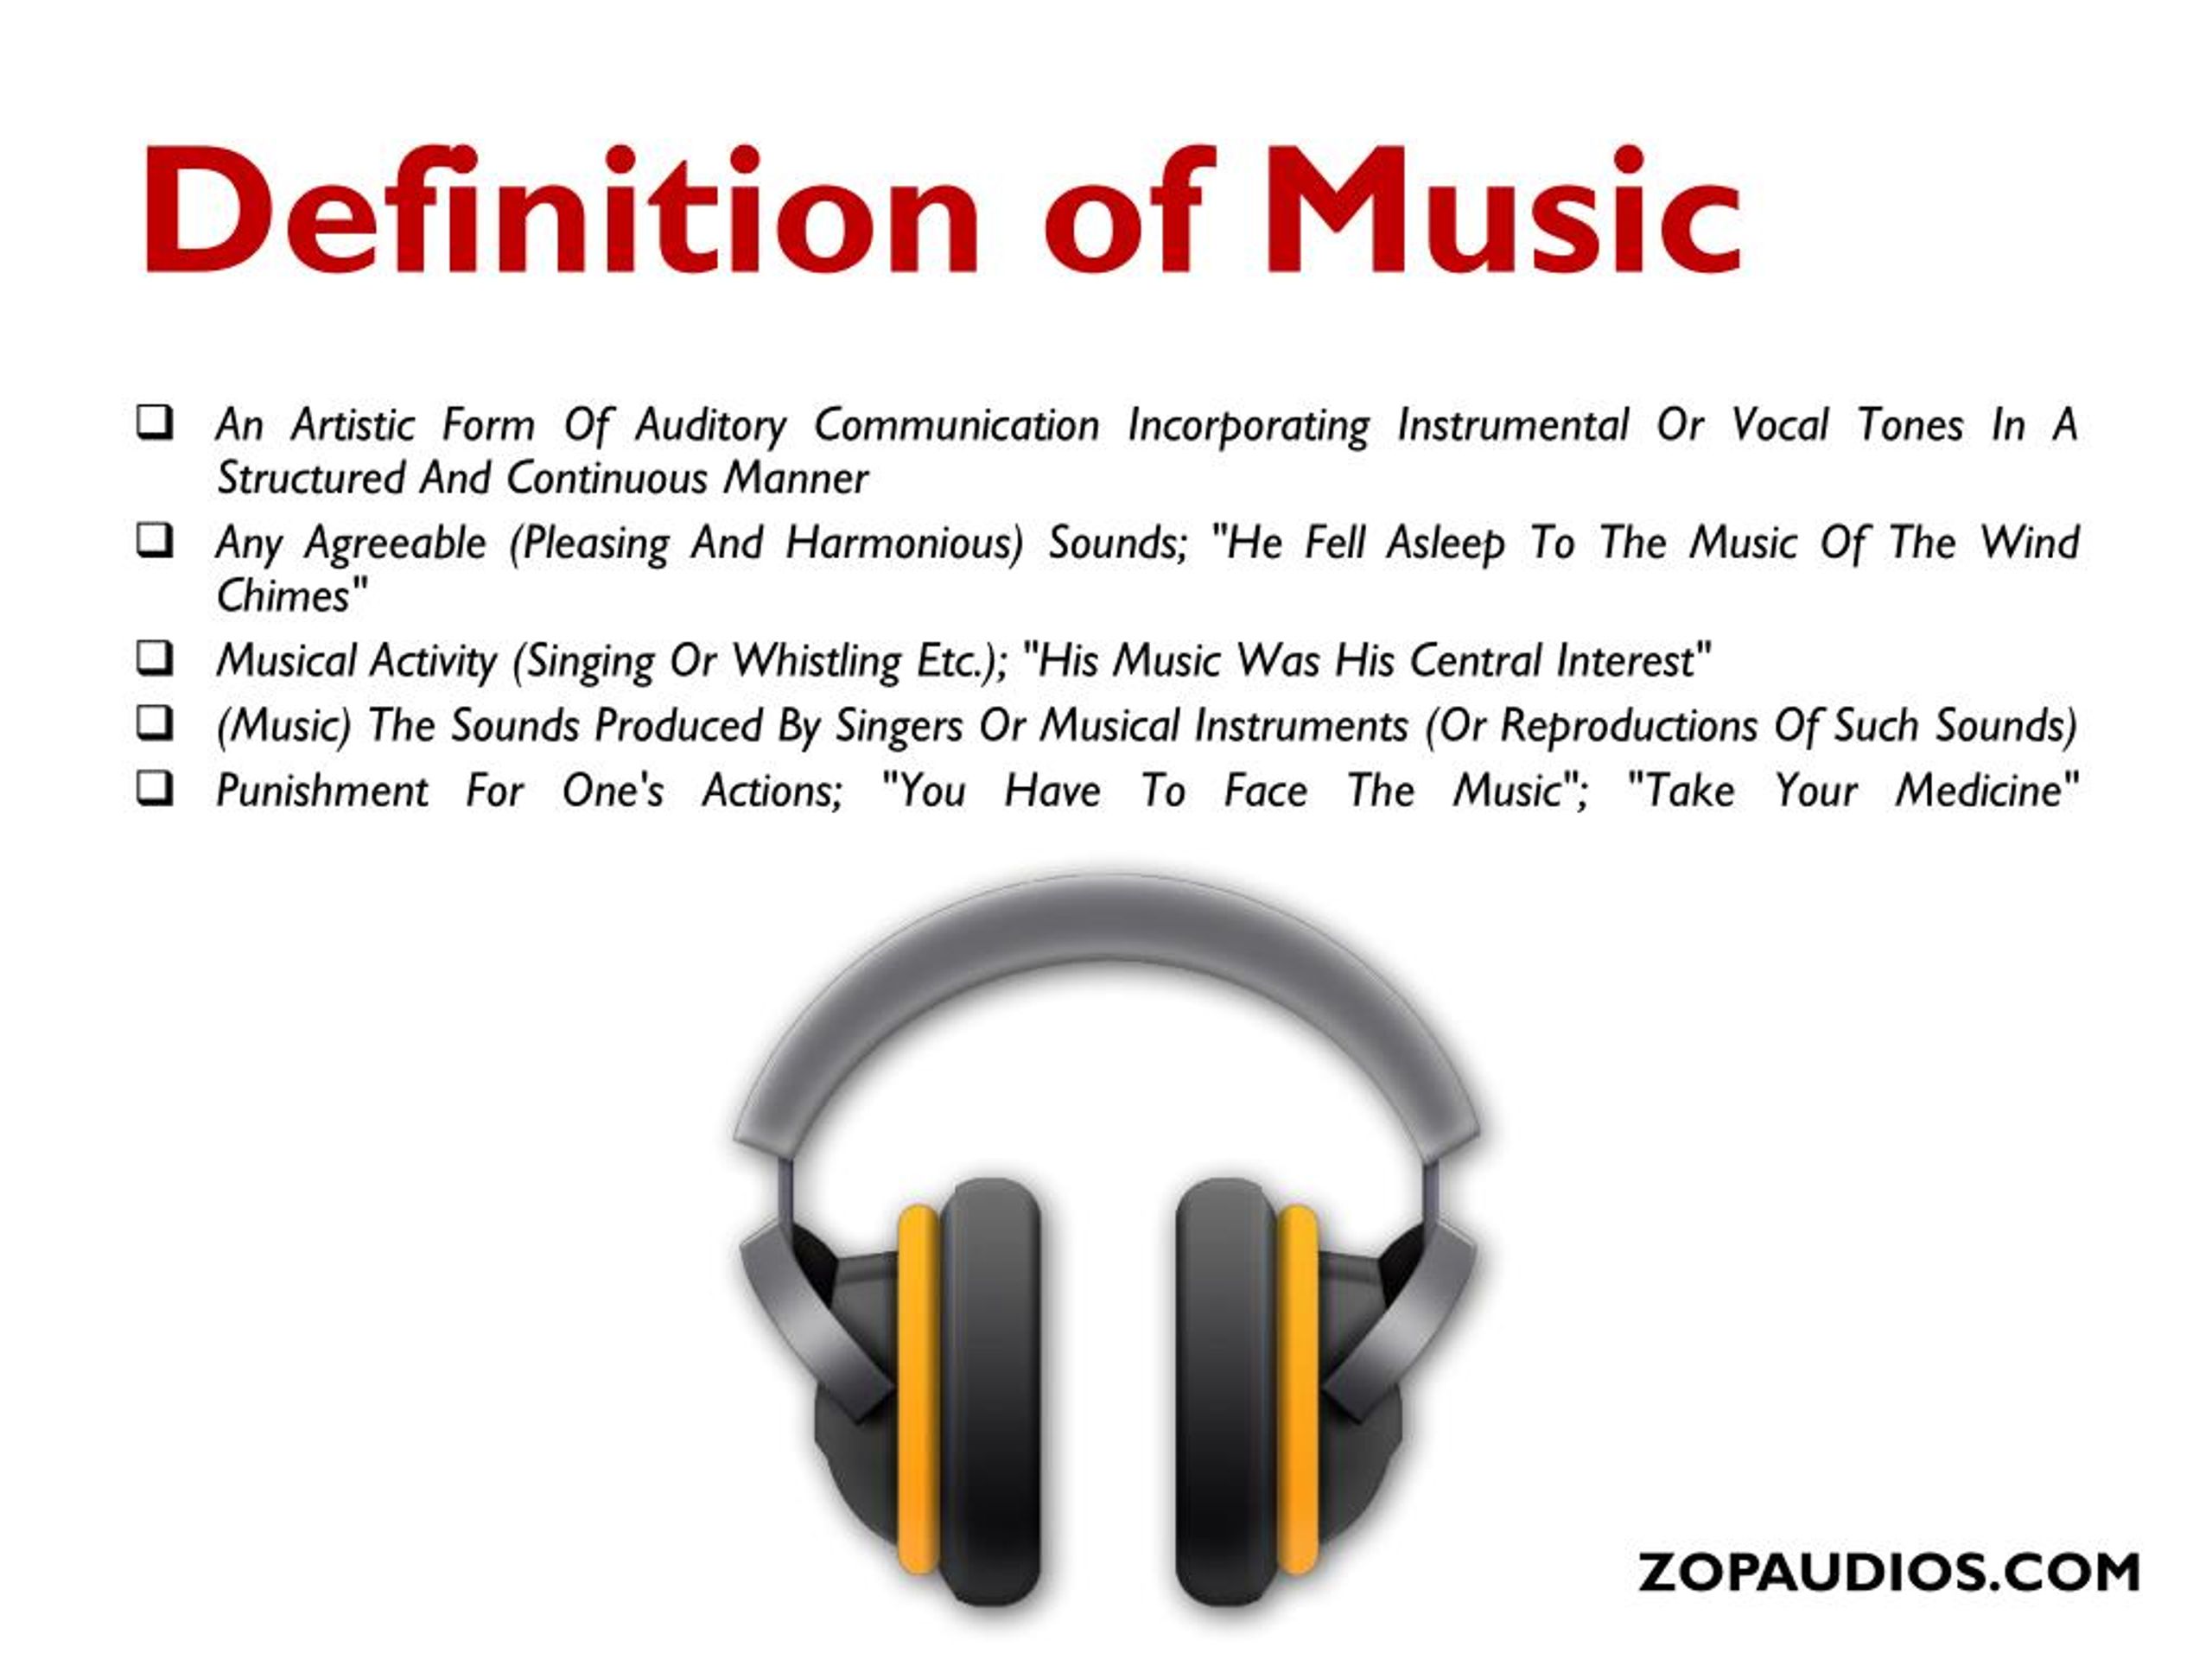 presentation definition music